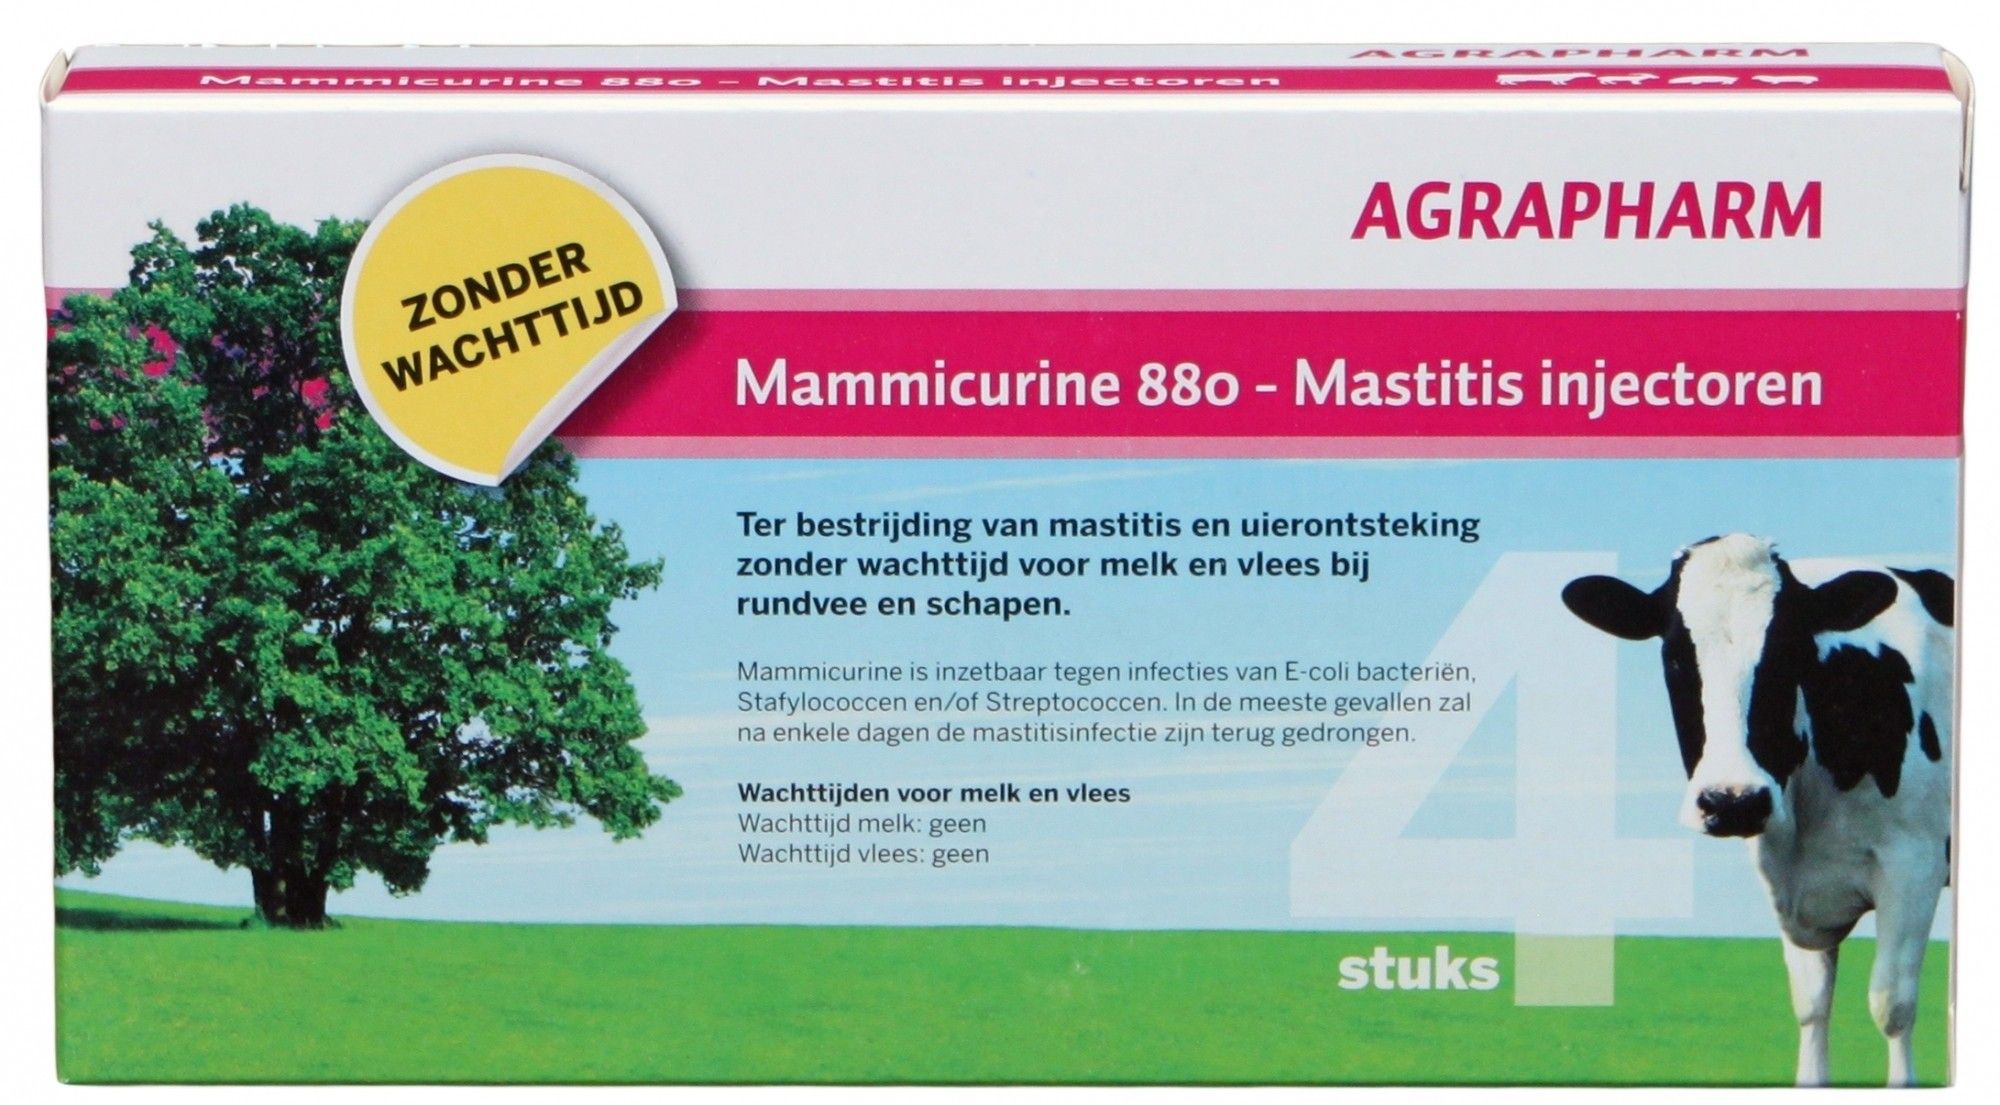 Mammicurine-880 mastitis injectoren 4 stuks